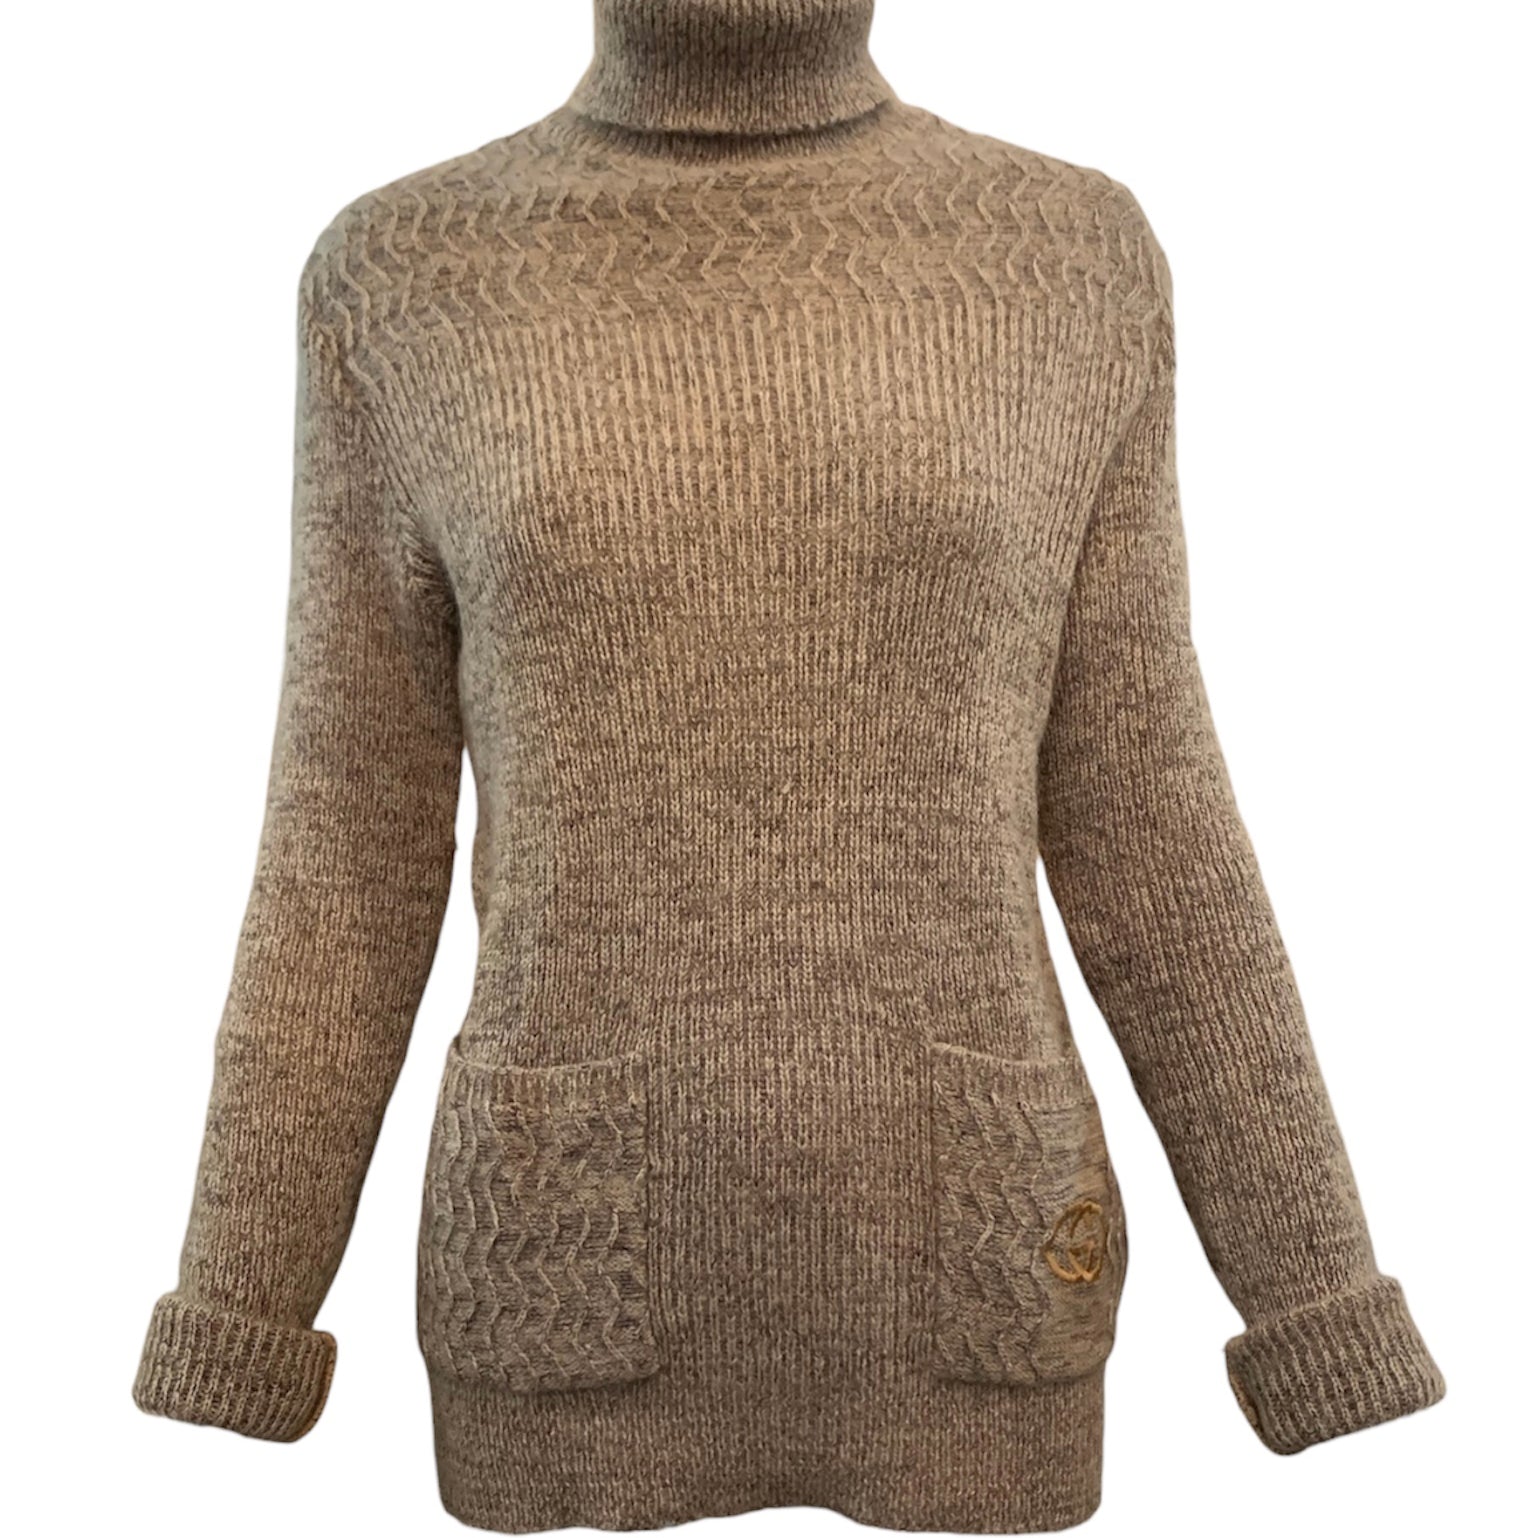 Gucci 1970s Alpaca/Cashmere Turtleneck Sweater FRONT 1 of 6